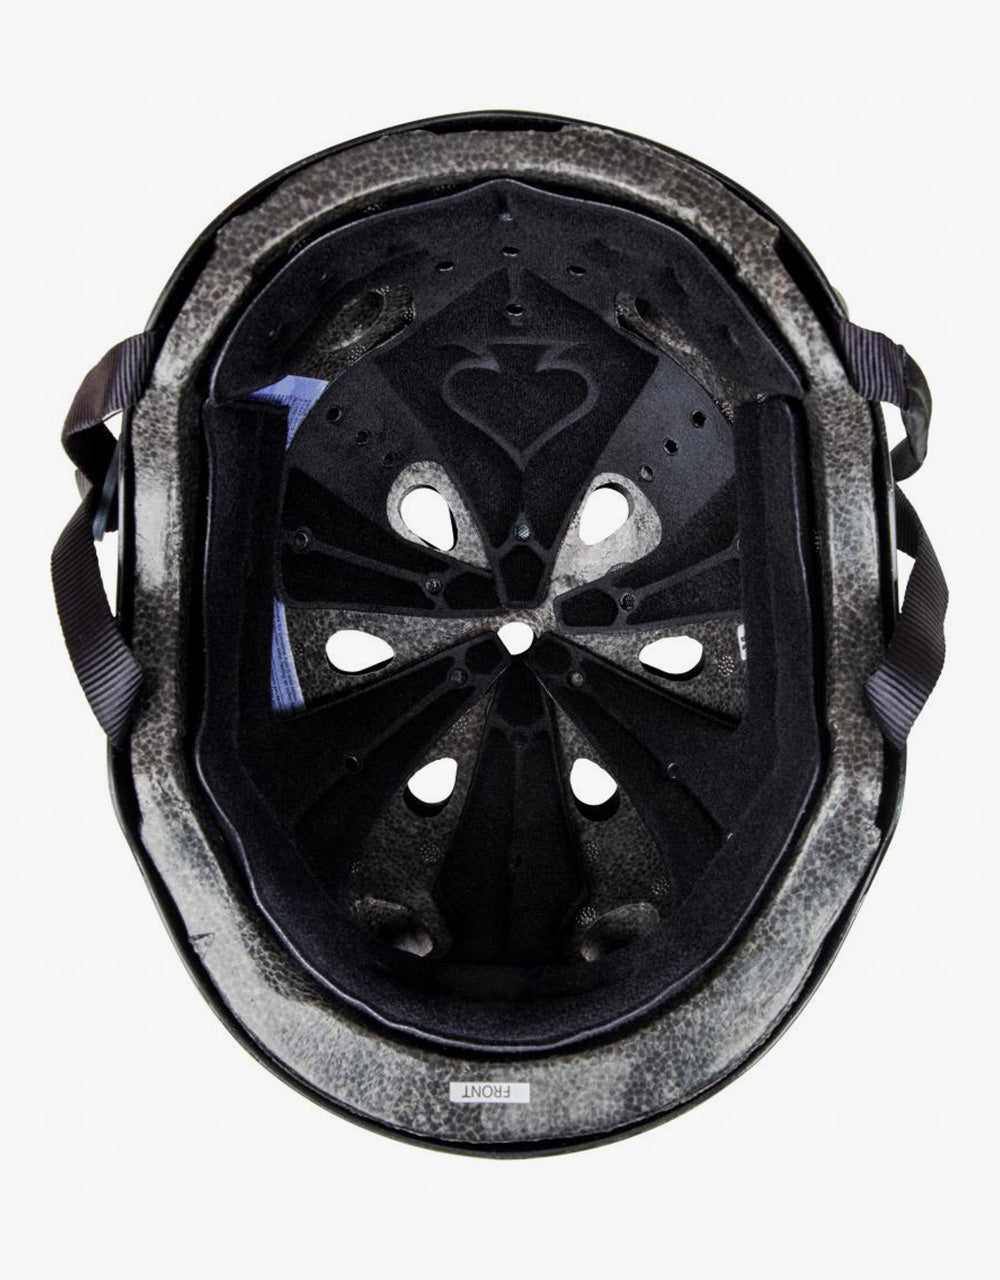 Pro Tec Classic Helmet - Black Metal Flake